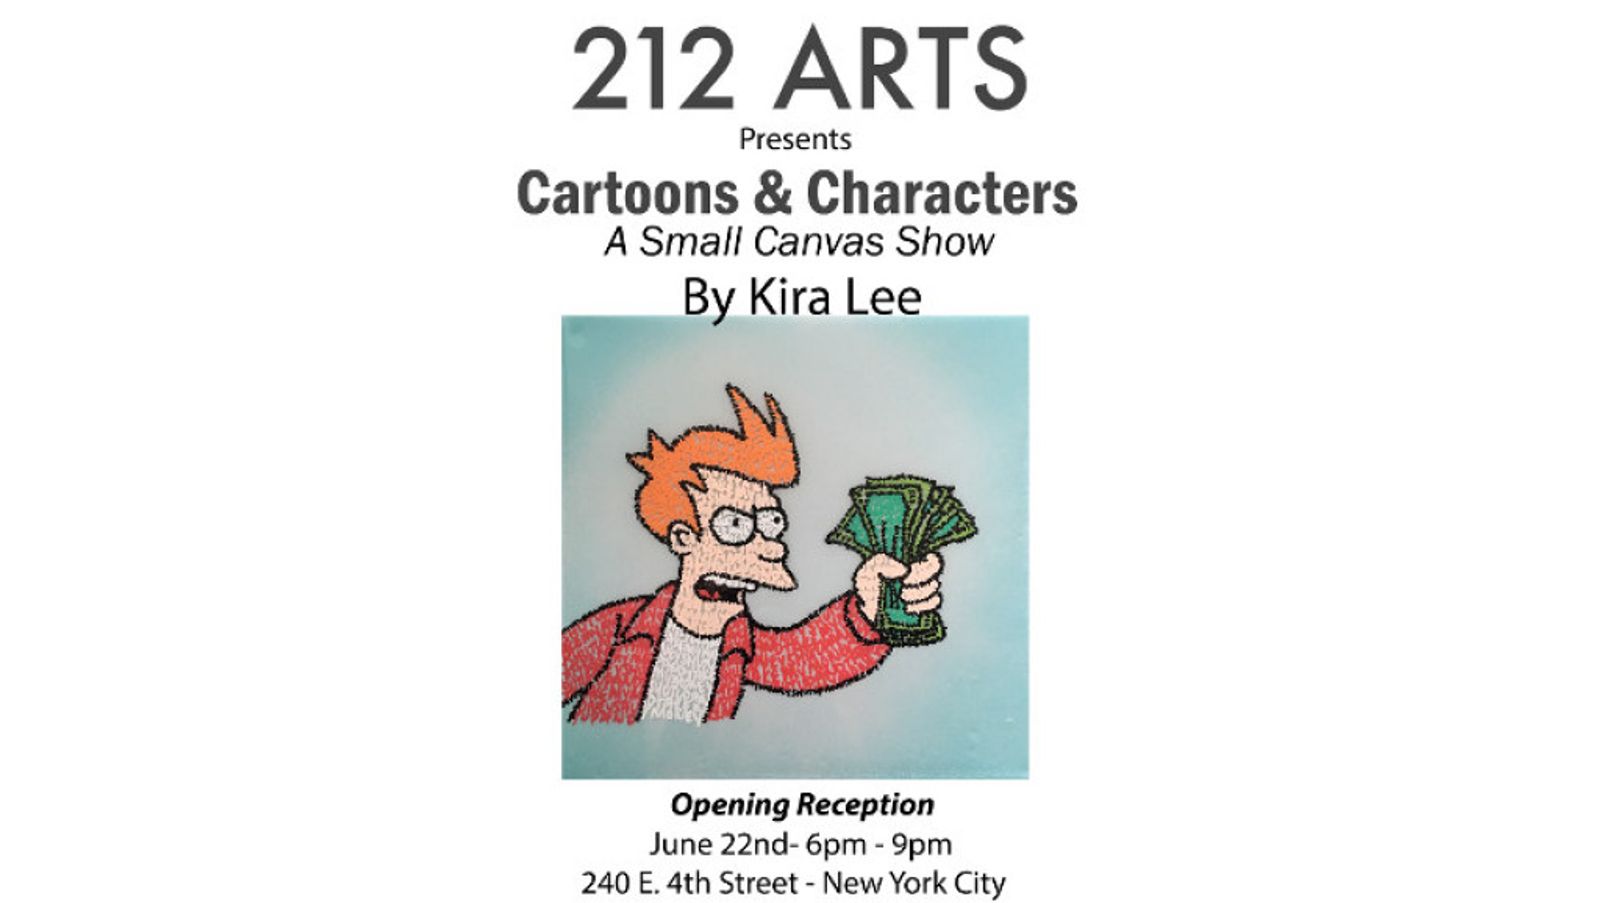 Kira Lee's Artwork for Sale Online as 212 Arts Exhibit Opens